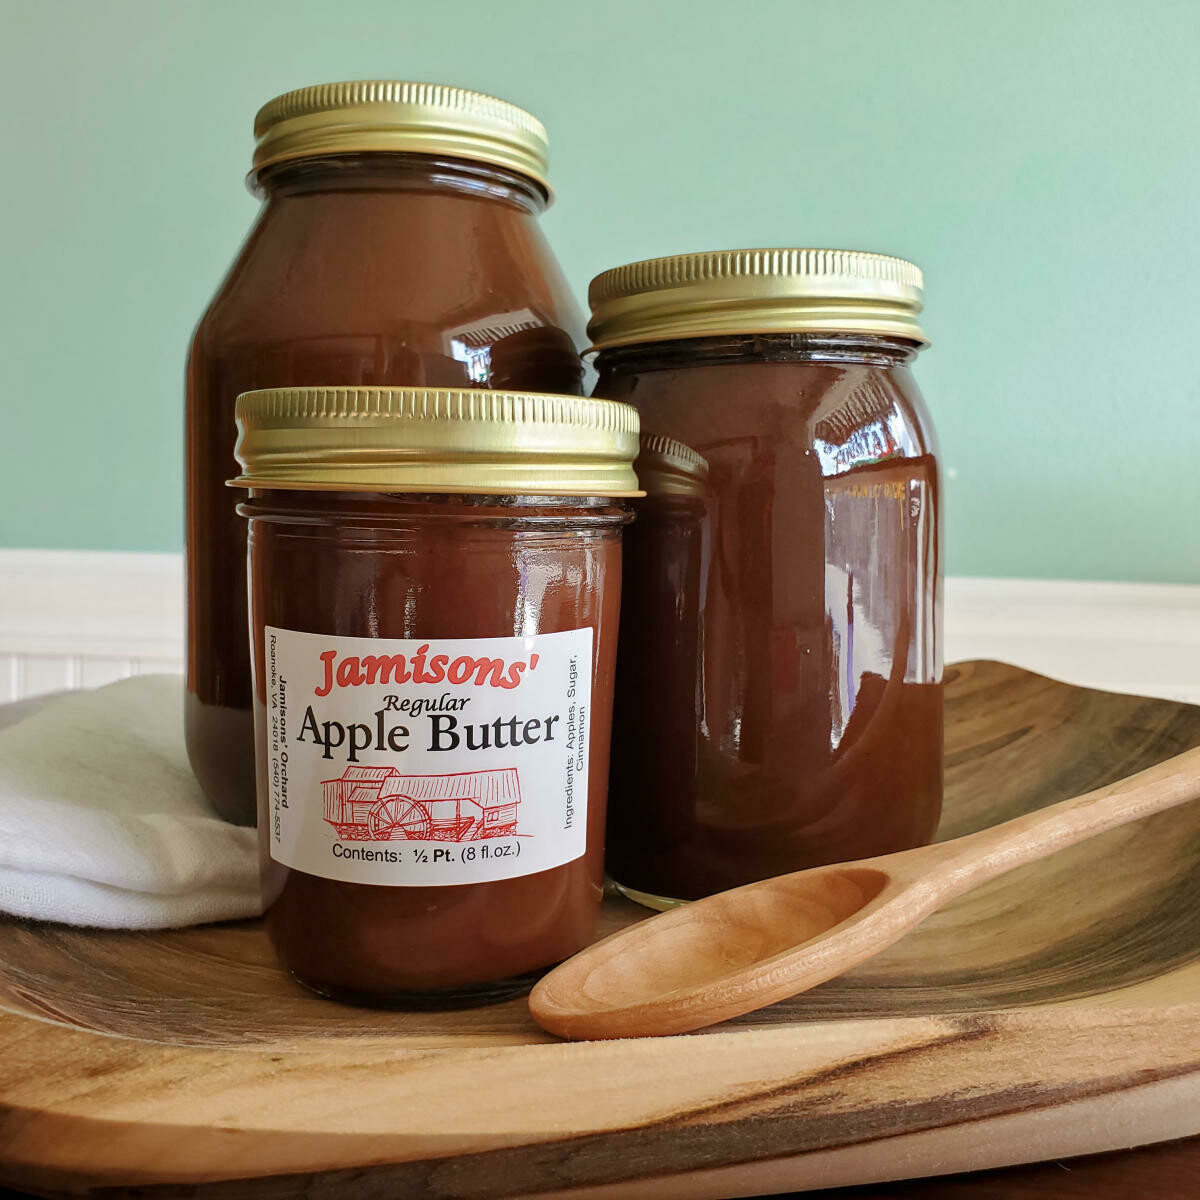 Jamisons' Homemade Regular Apple Butter